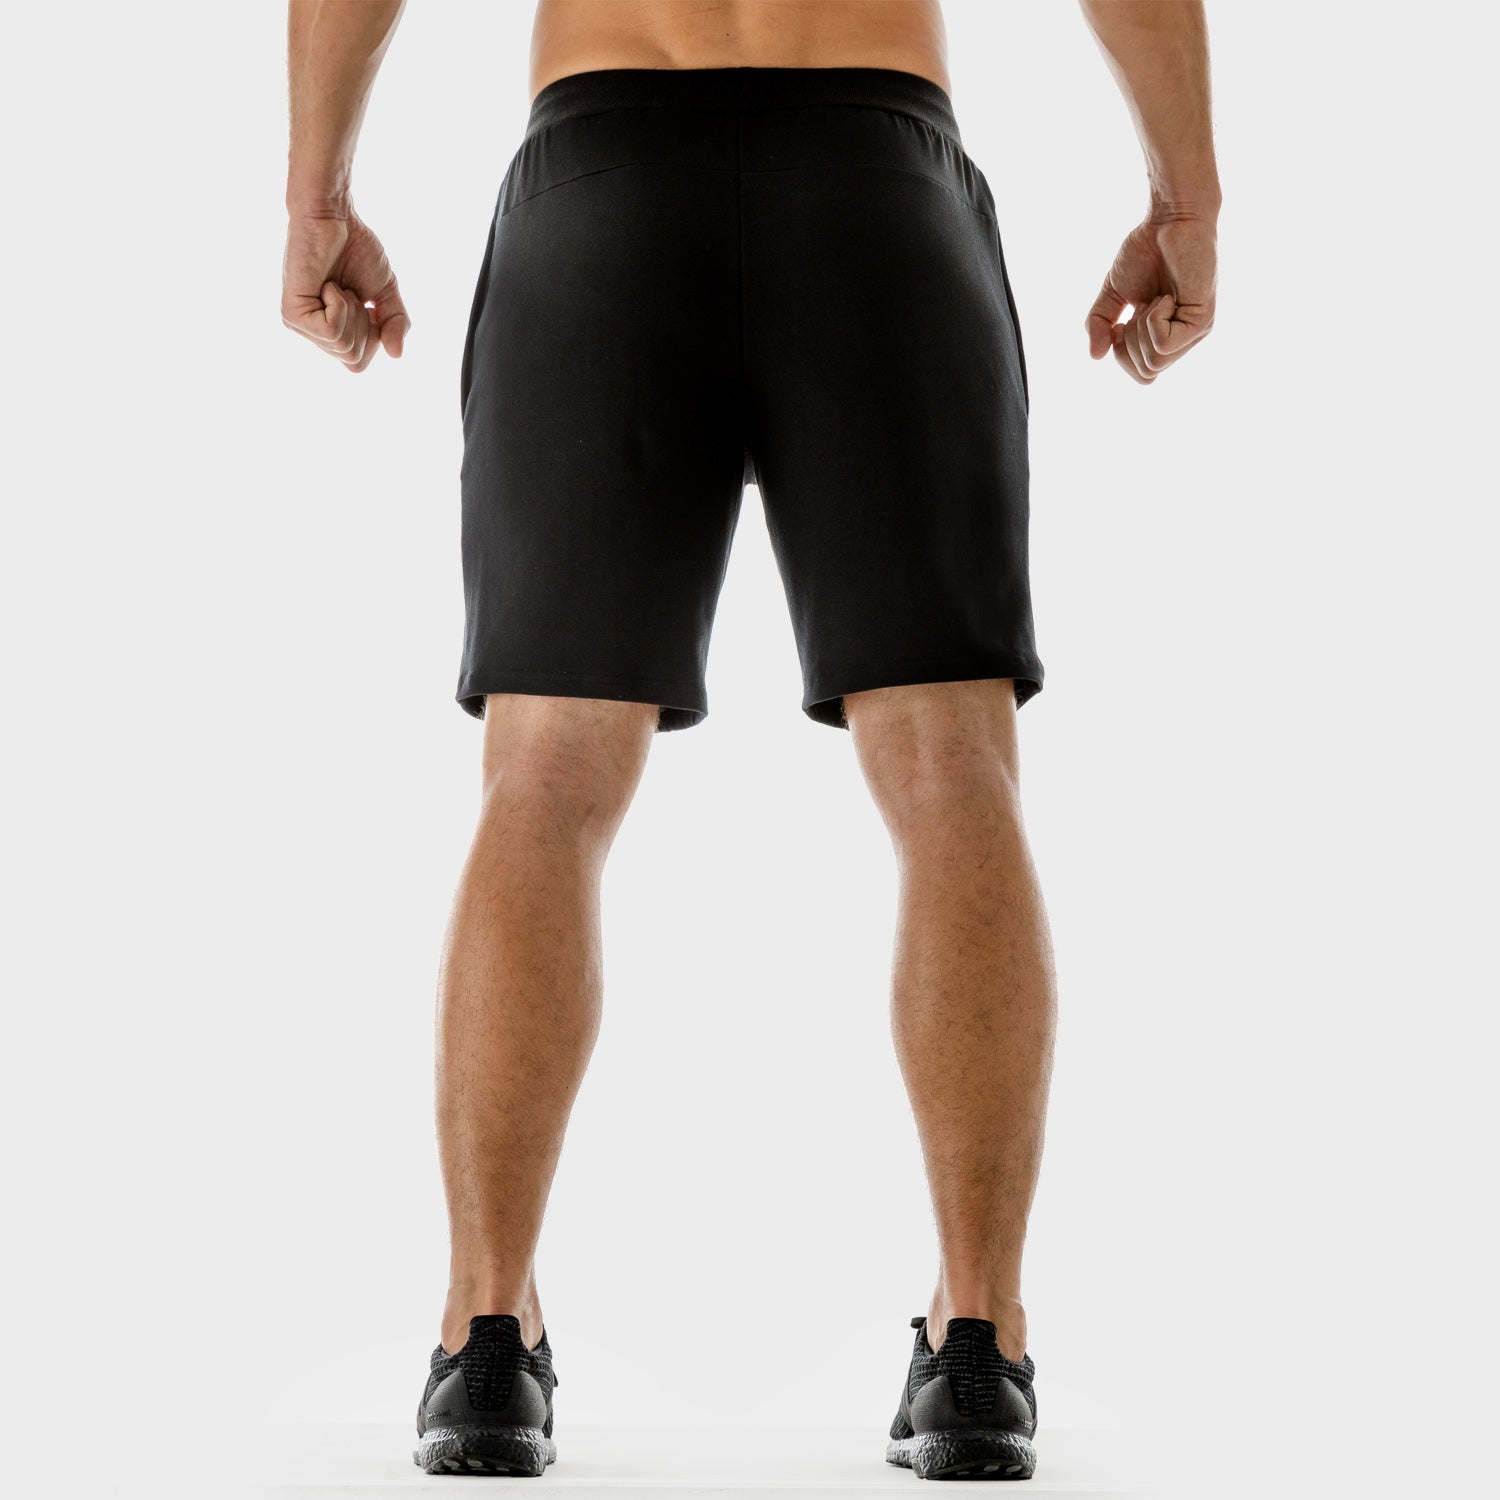 squatwolf-workout-short-for-men-lab-360-jogger-shorts-black-gym-wear